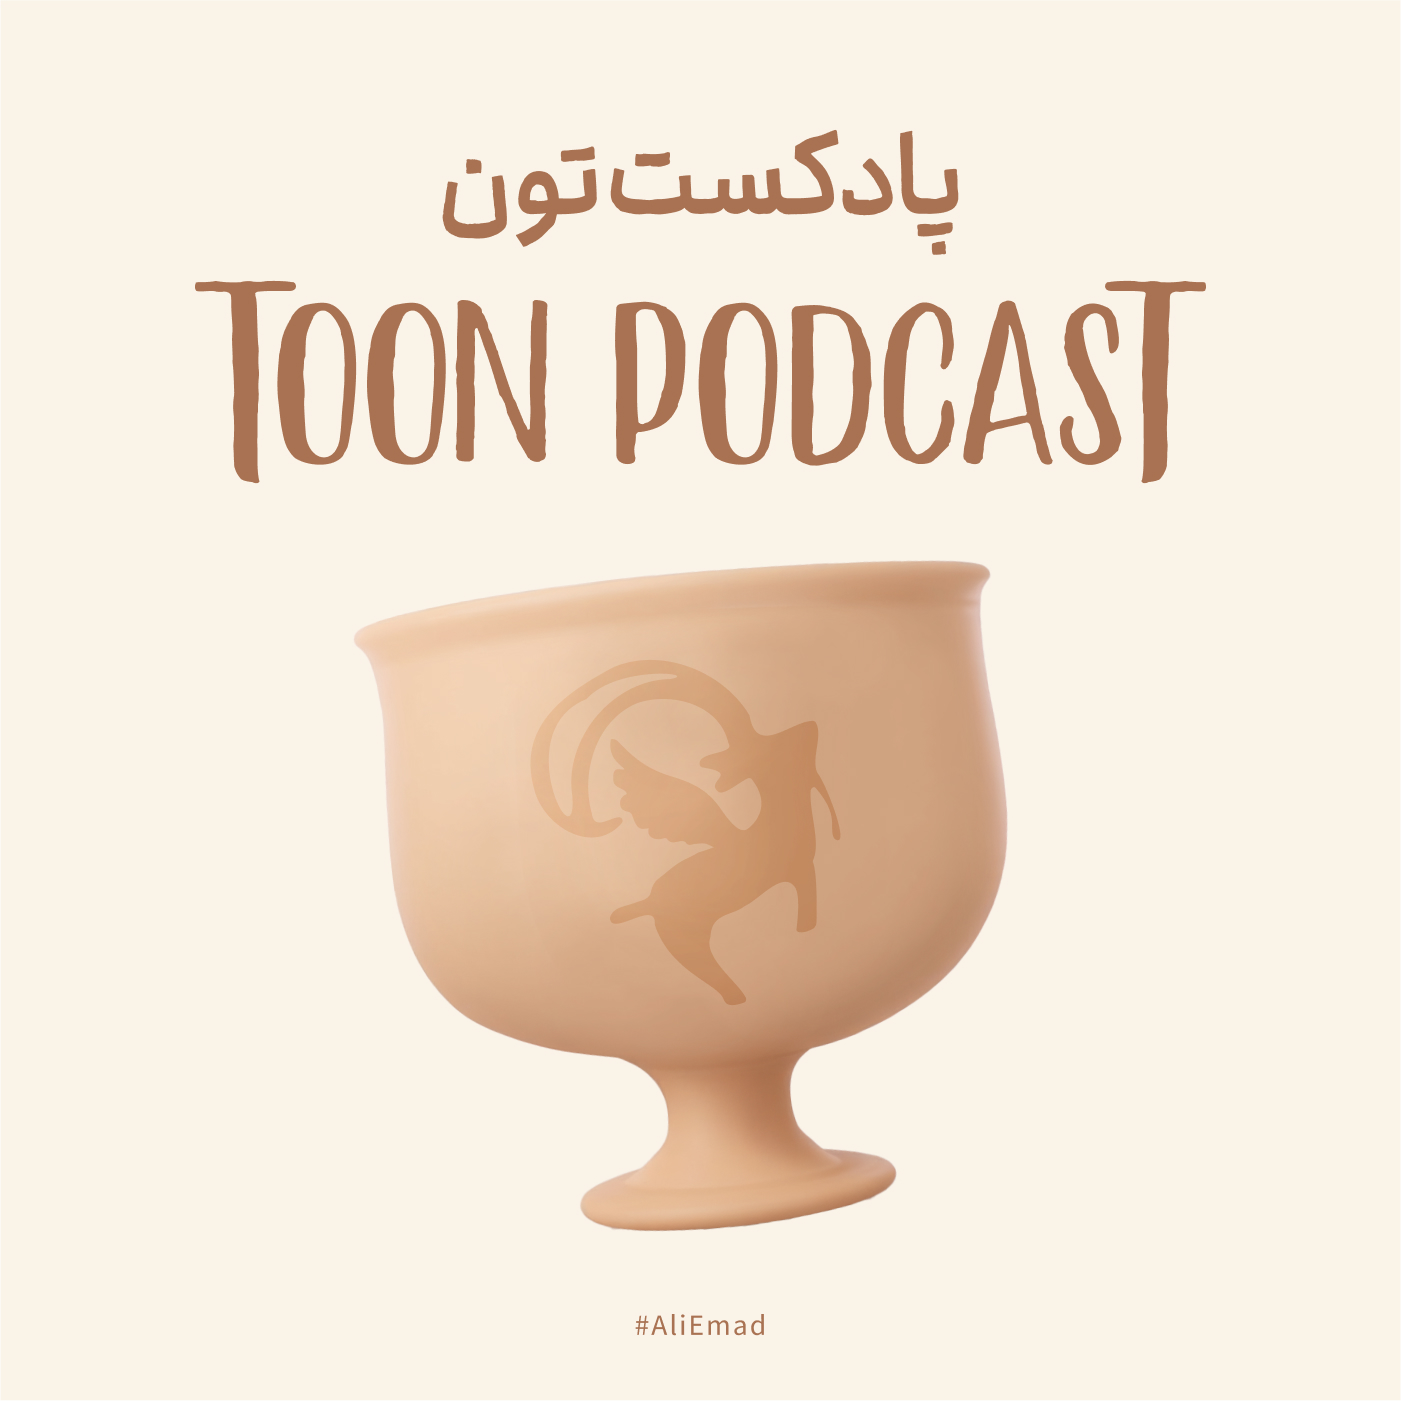 Toon Podcast – پادکست تون